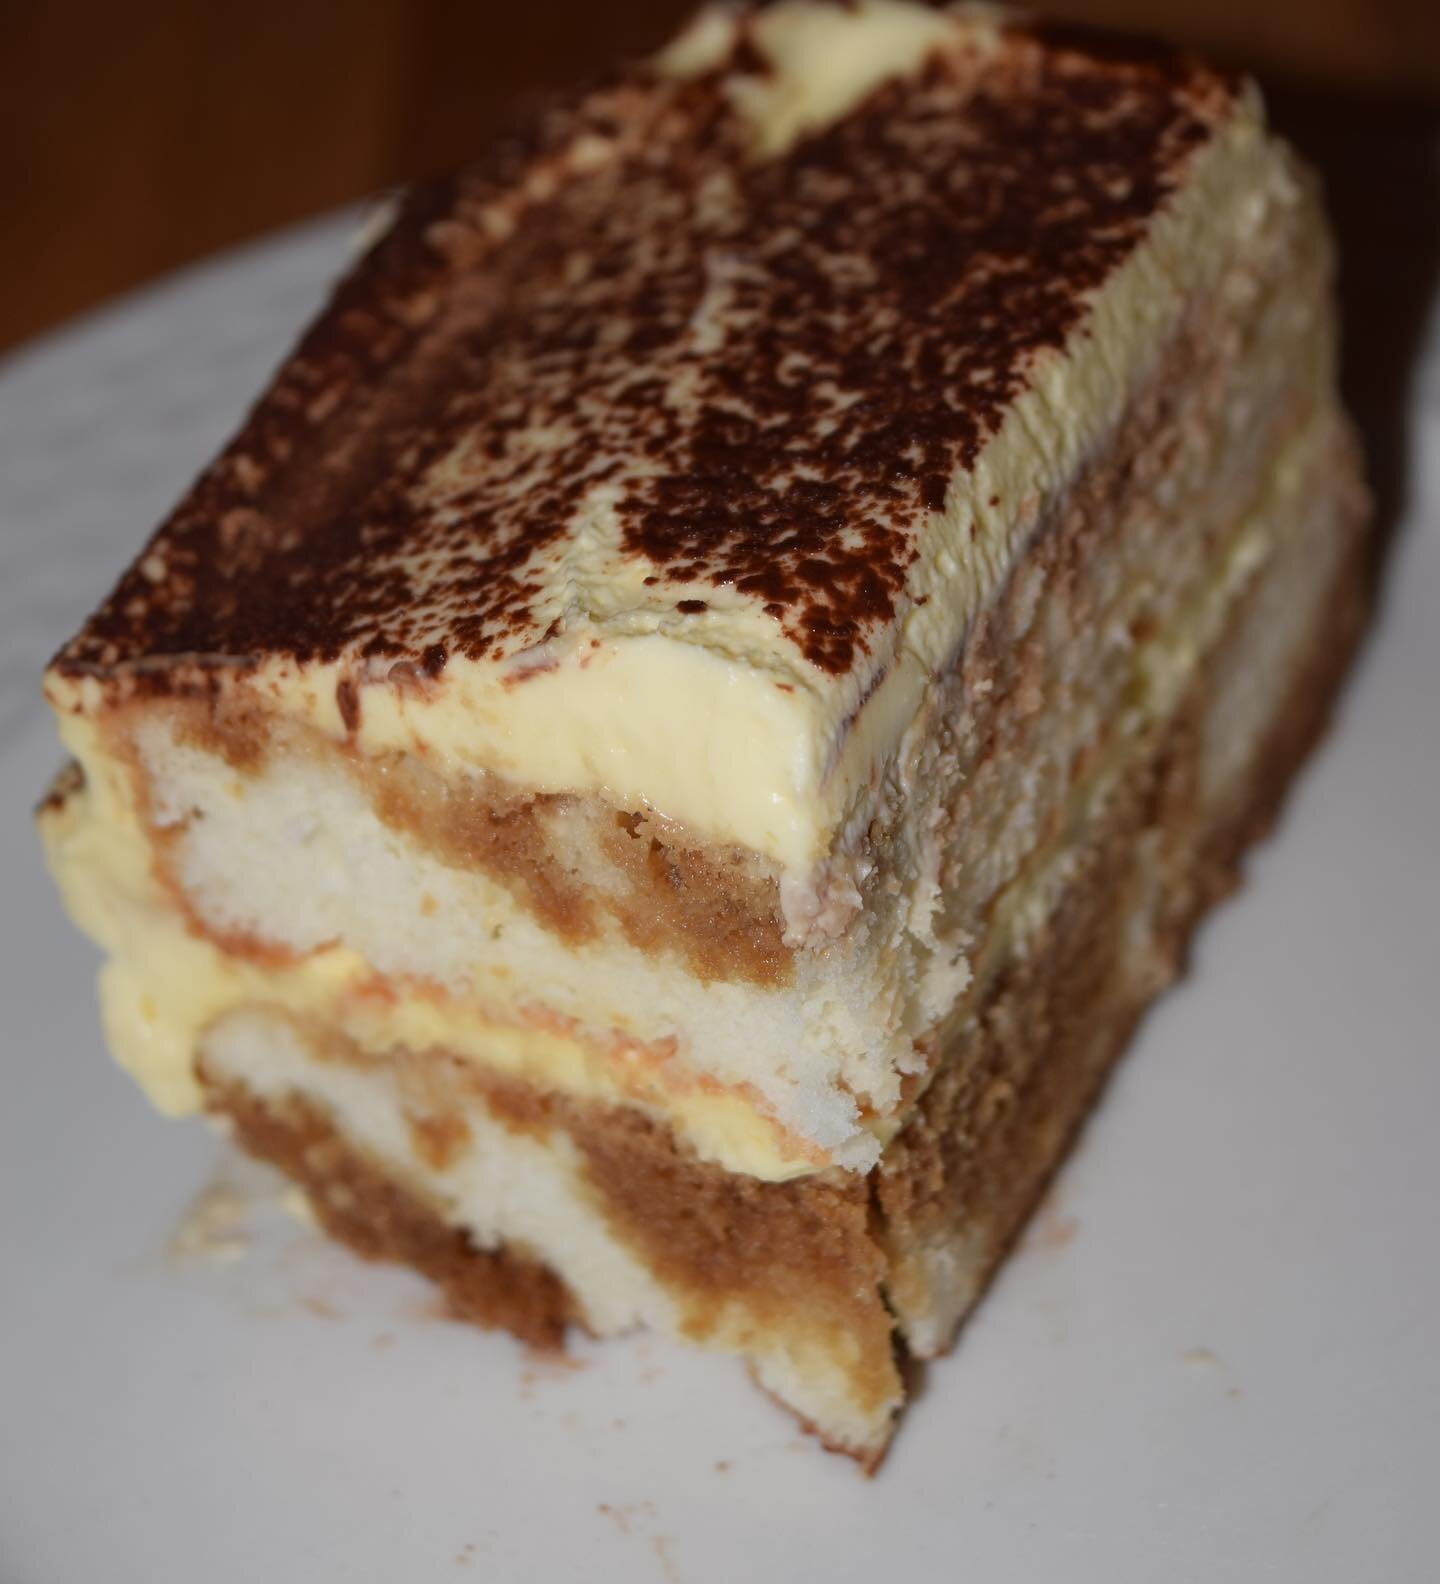 tiramisu ☕️ no ladyfingers needed when you use @alisoneroman&rsquo;s almost angel food cake recipe!